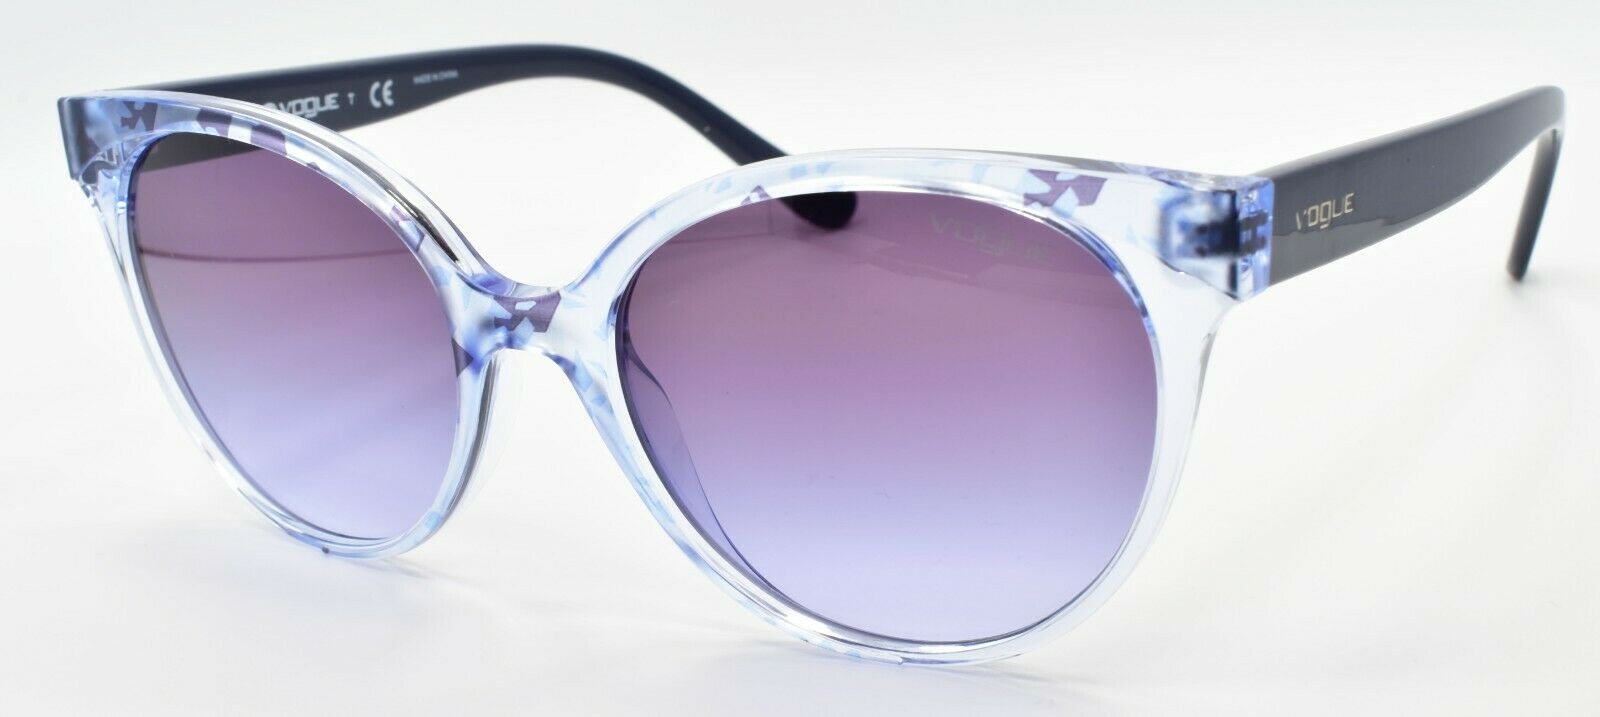 1-Vogue VO5246-S 27274Q Women's Sunglasses Light Blue Textured / Violet Gradient-8056597076364-IKSpecs